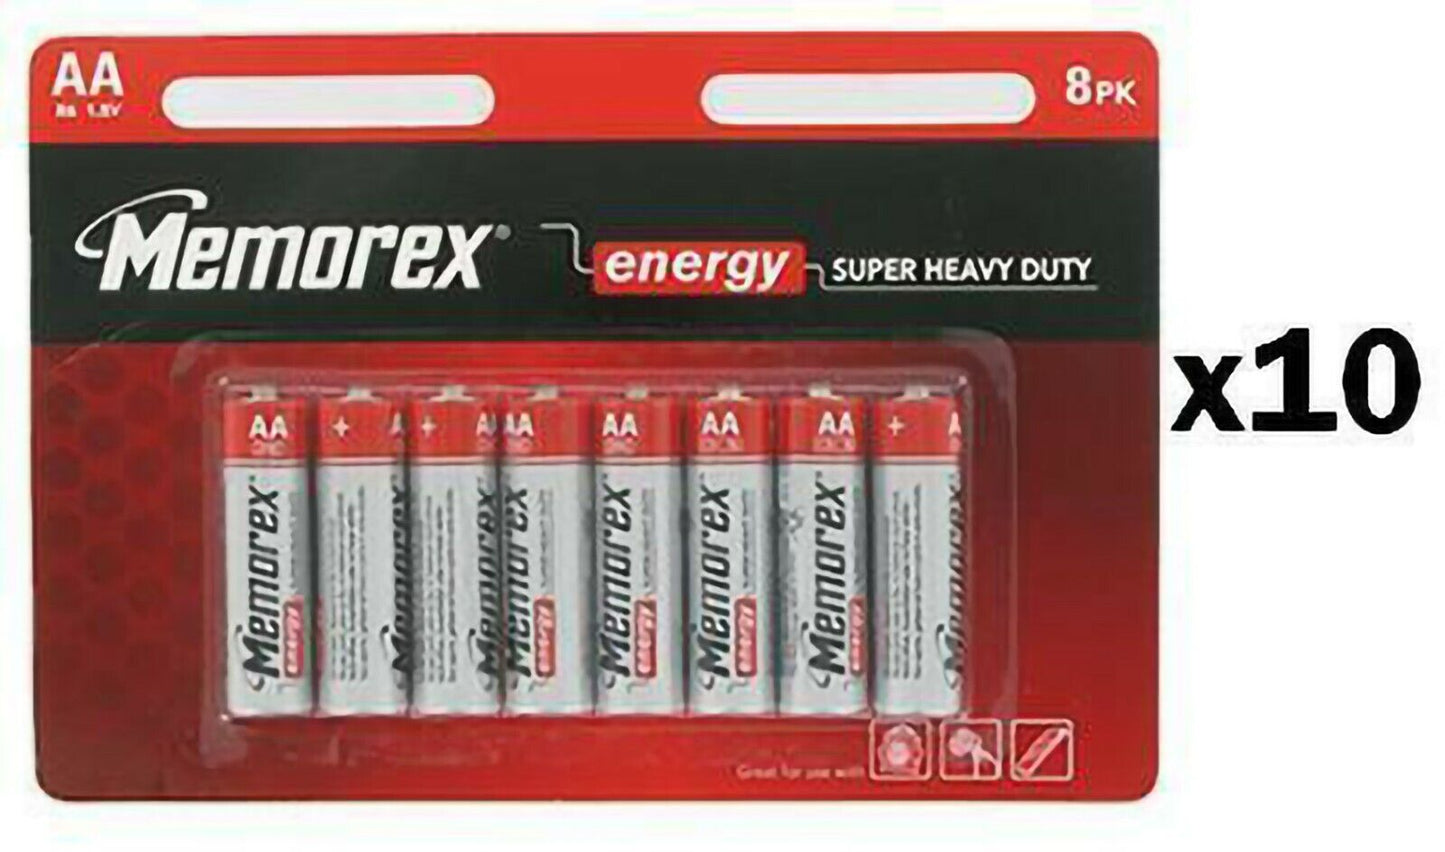 10 x 8 AA Memorex energy Super Heavy Duty Batteries